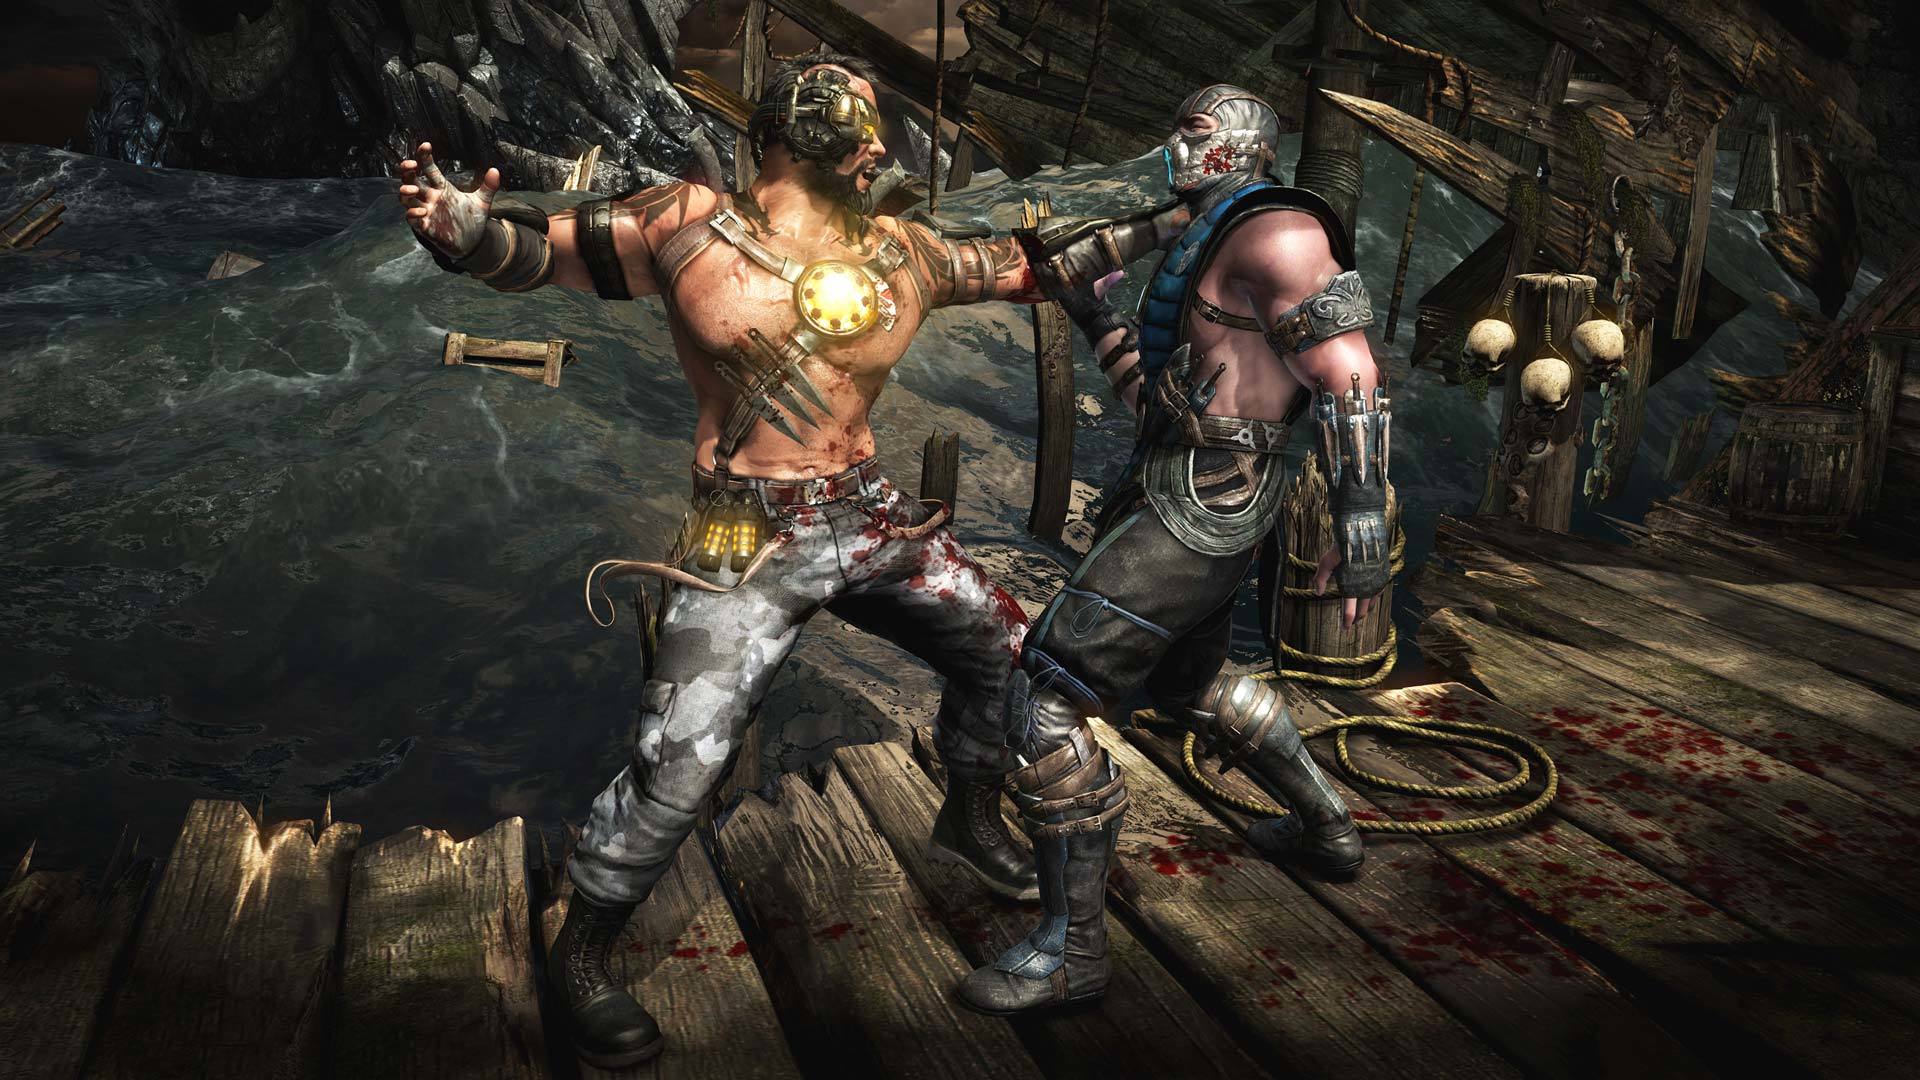 Mortal Kombat X screenshot game